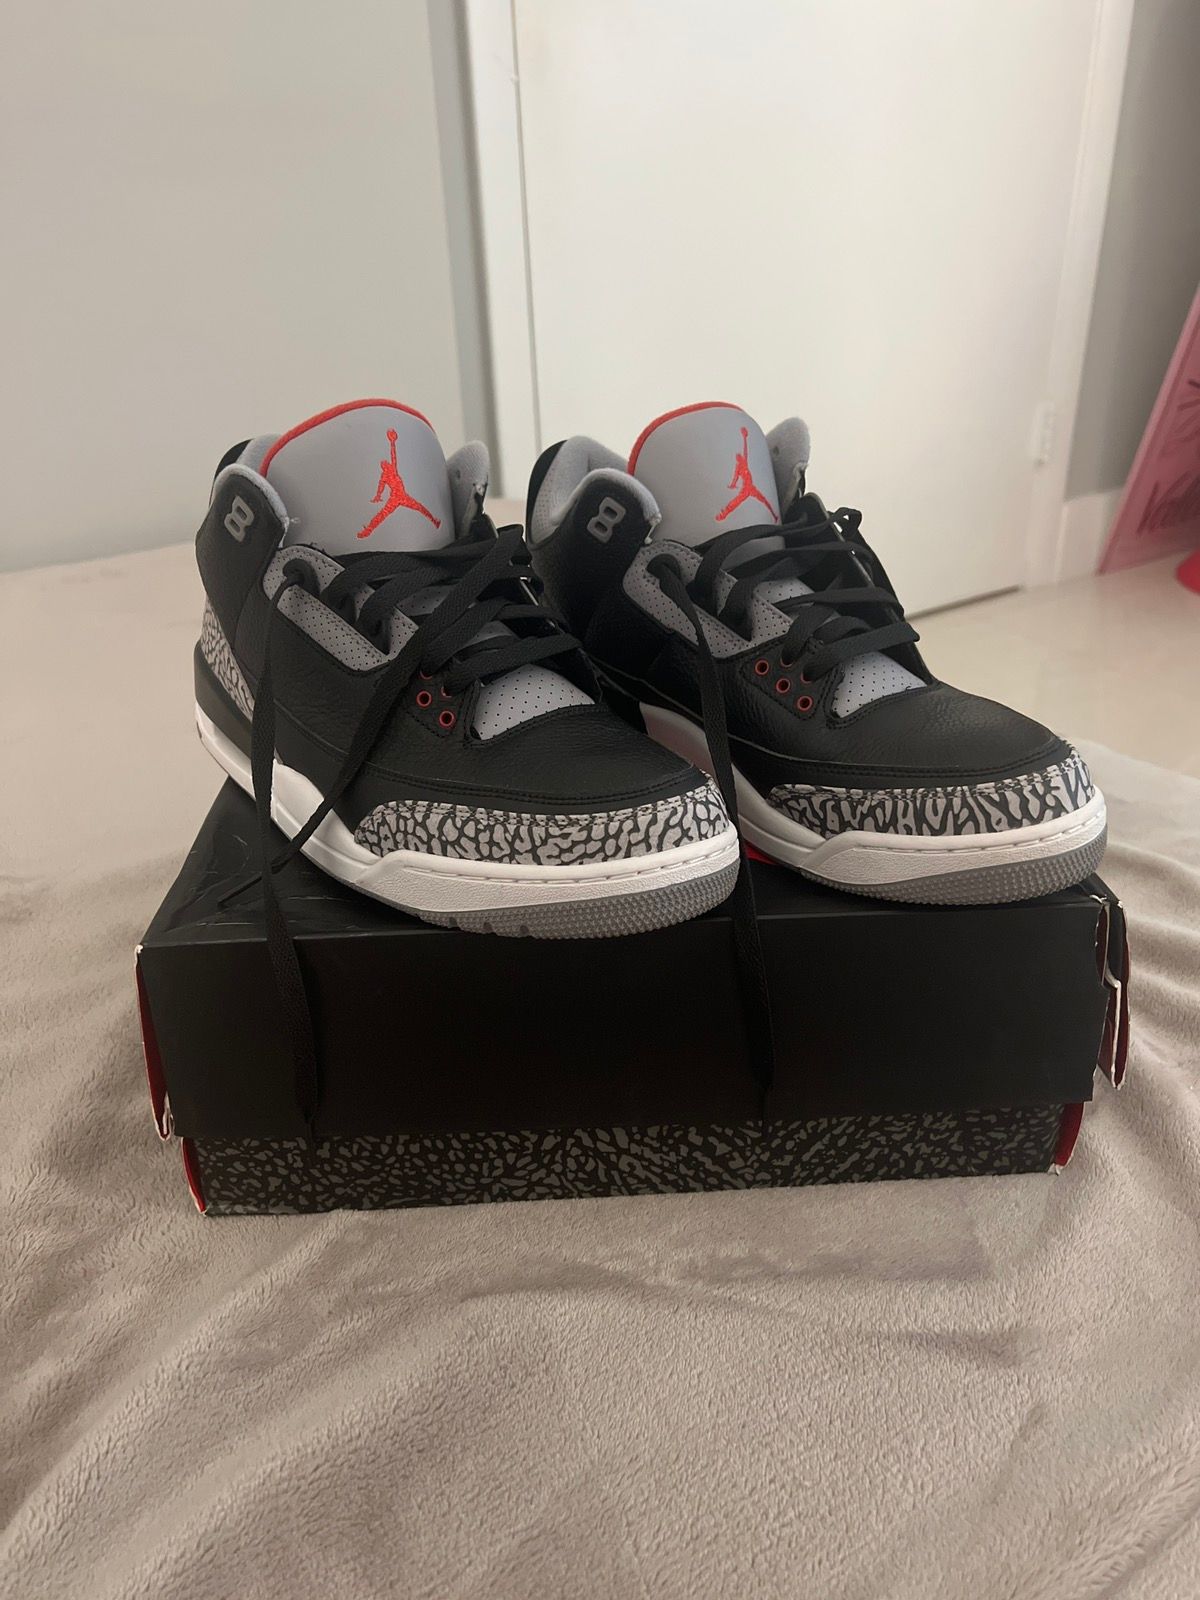 Pre-owned Jordan Nike Air Jordan 3 Og Black Cement 2018 Shoes